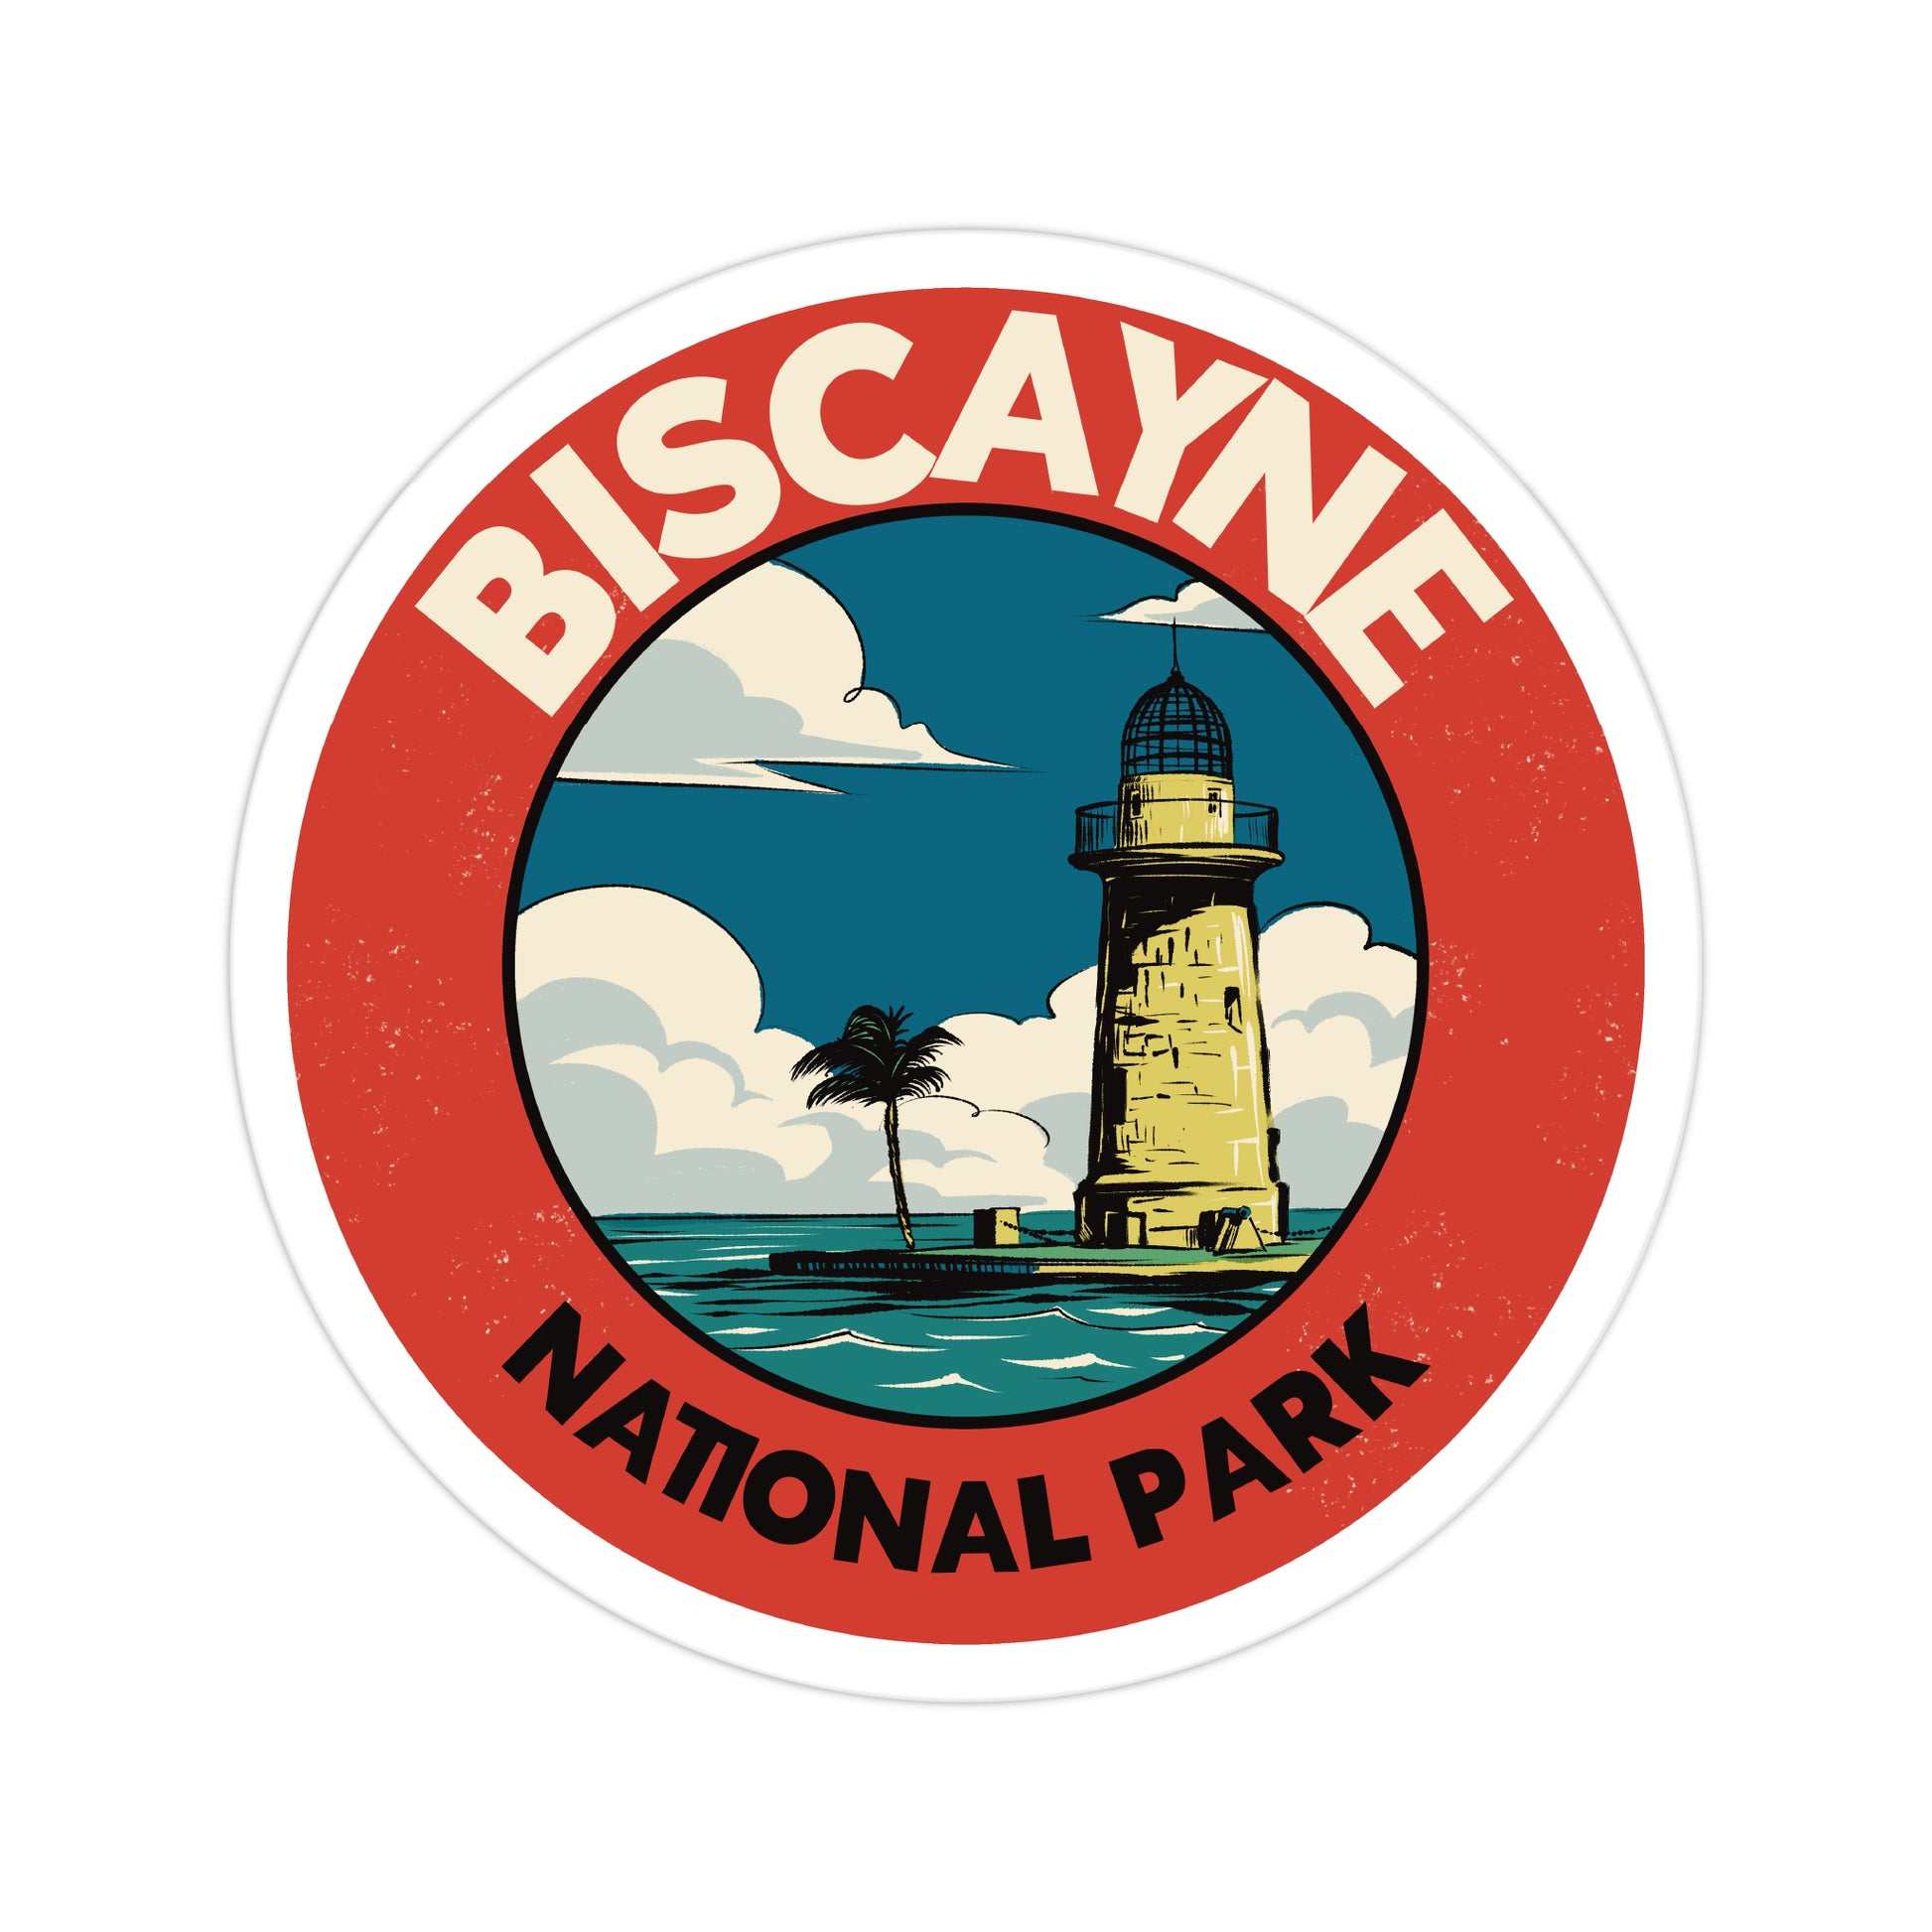 A sticker of Biscayne National Park